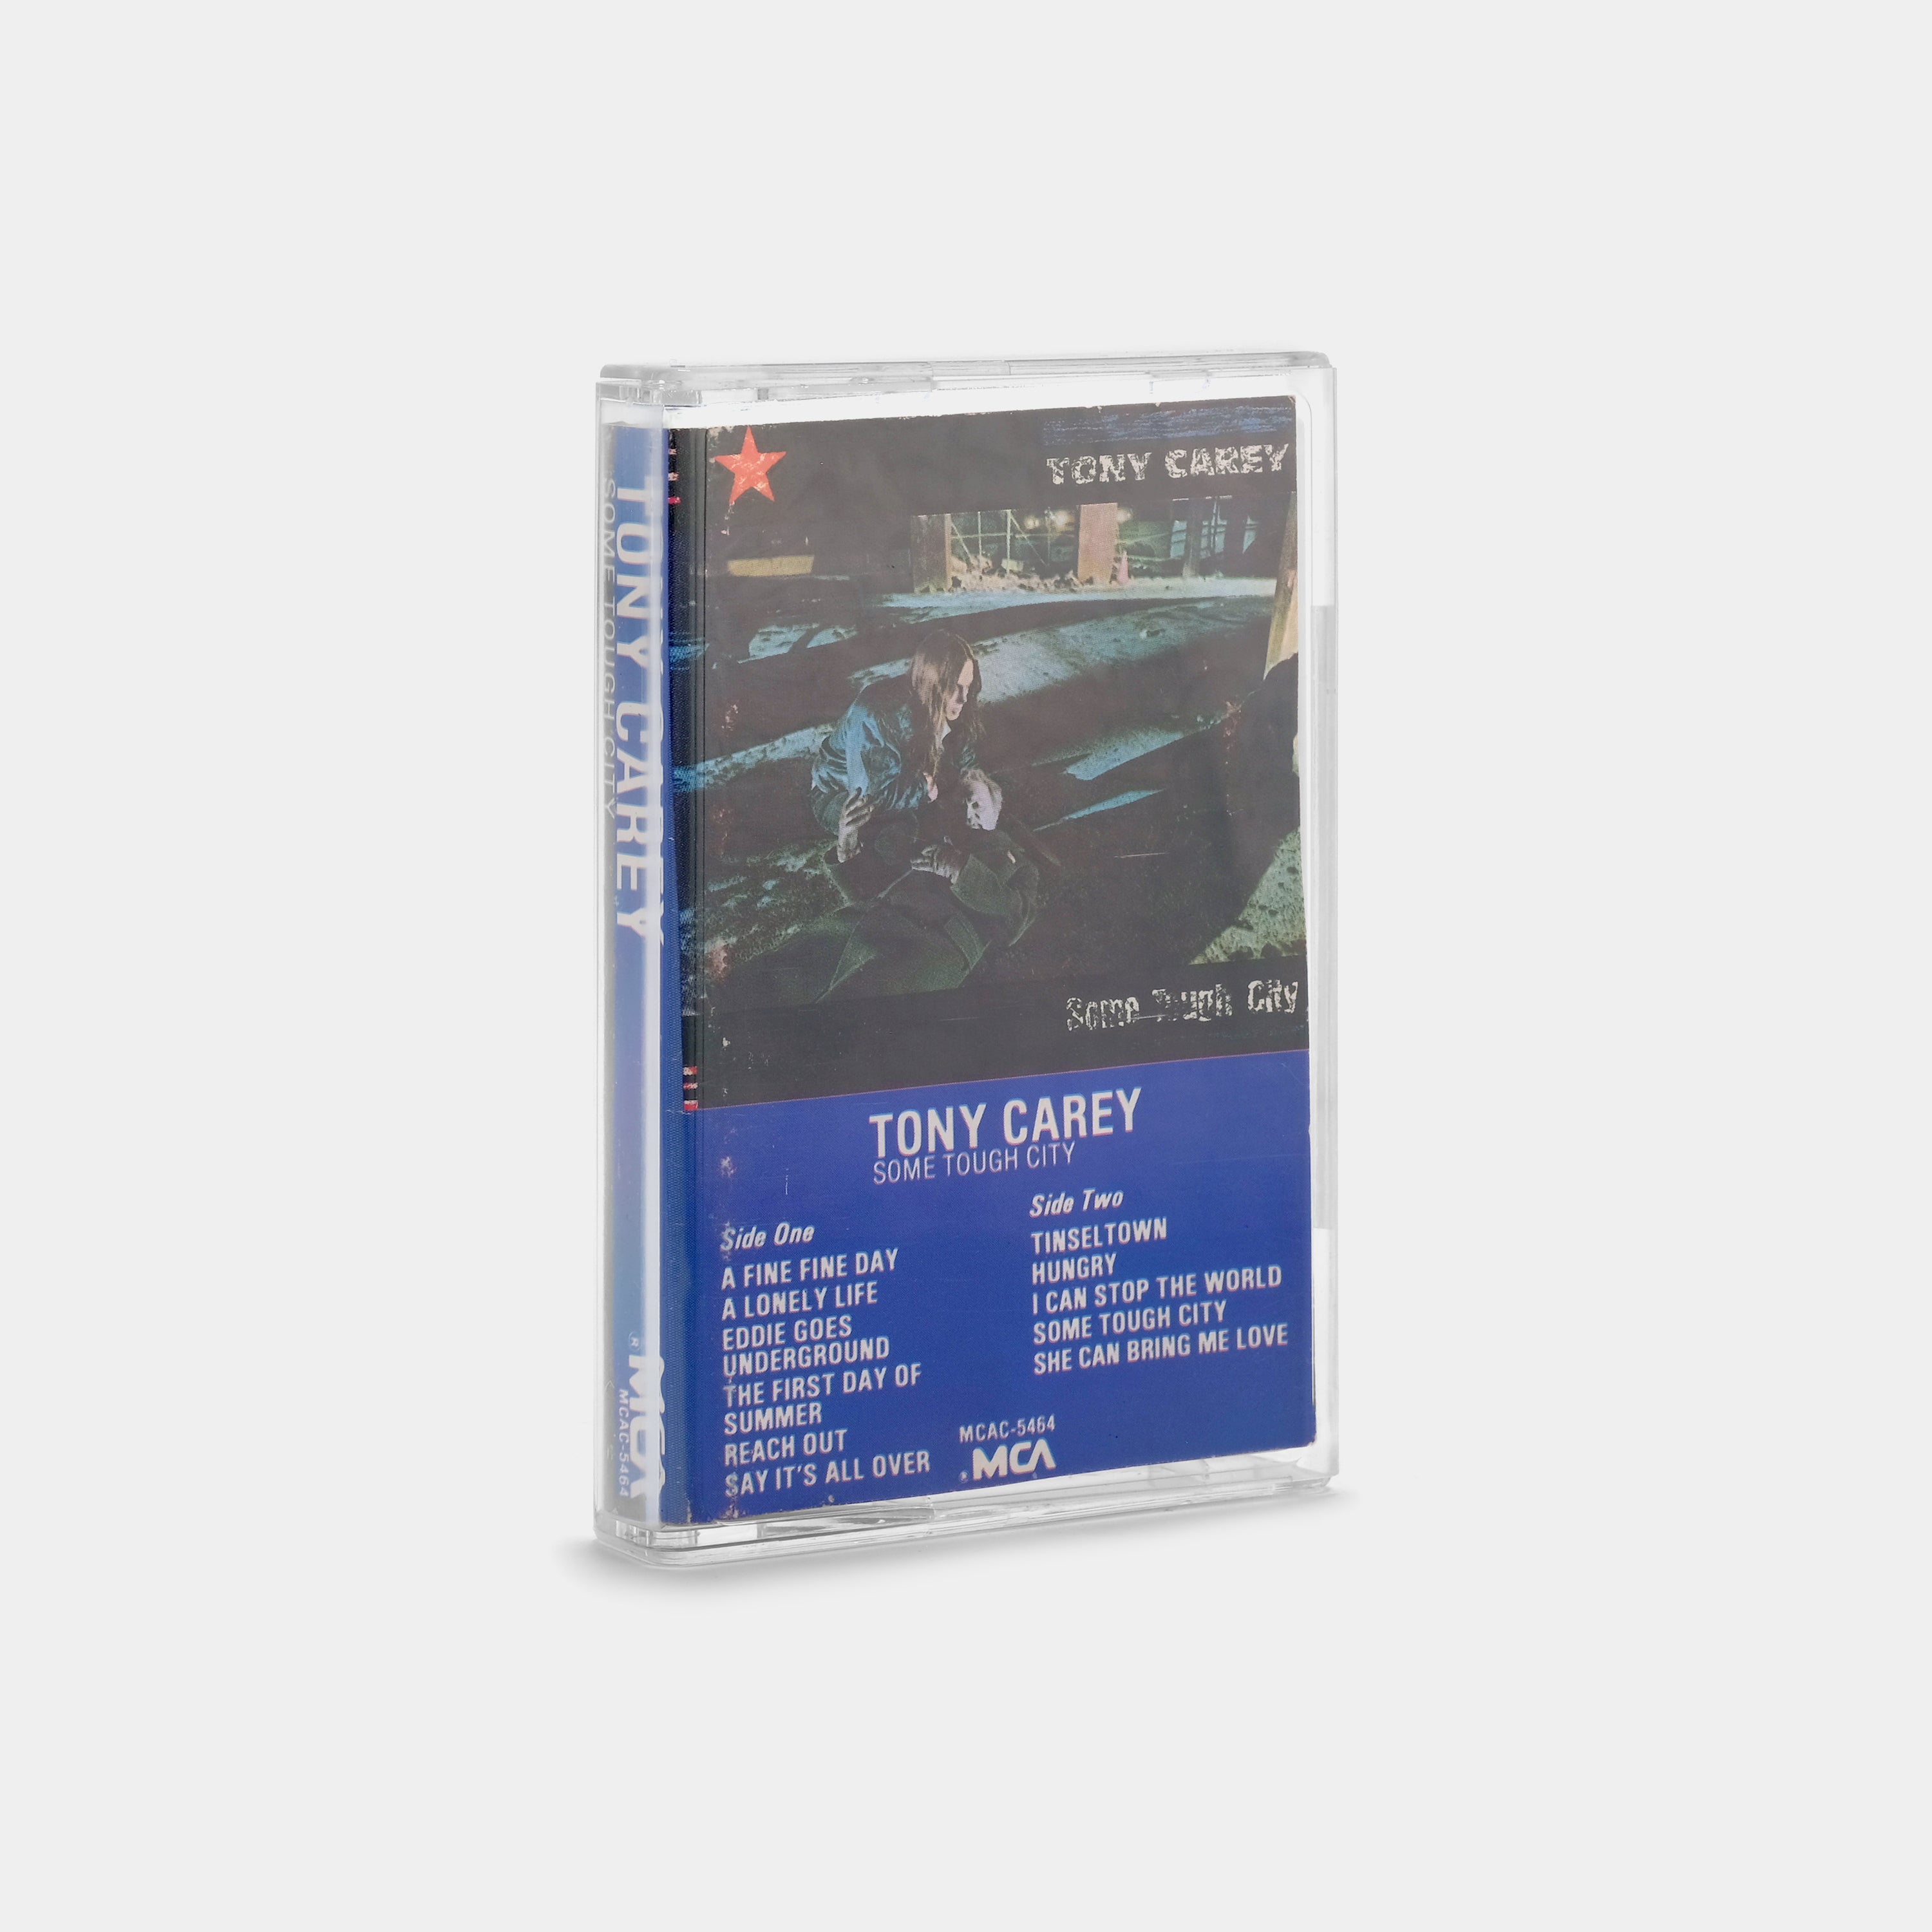 Tony Carey - Some Tough City Cassette Tape